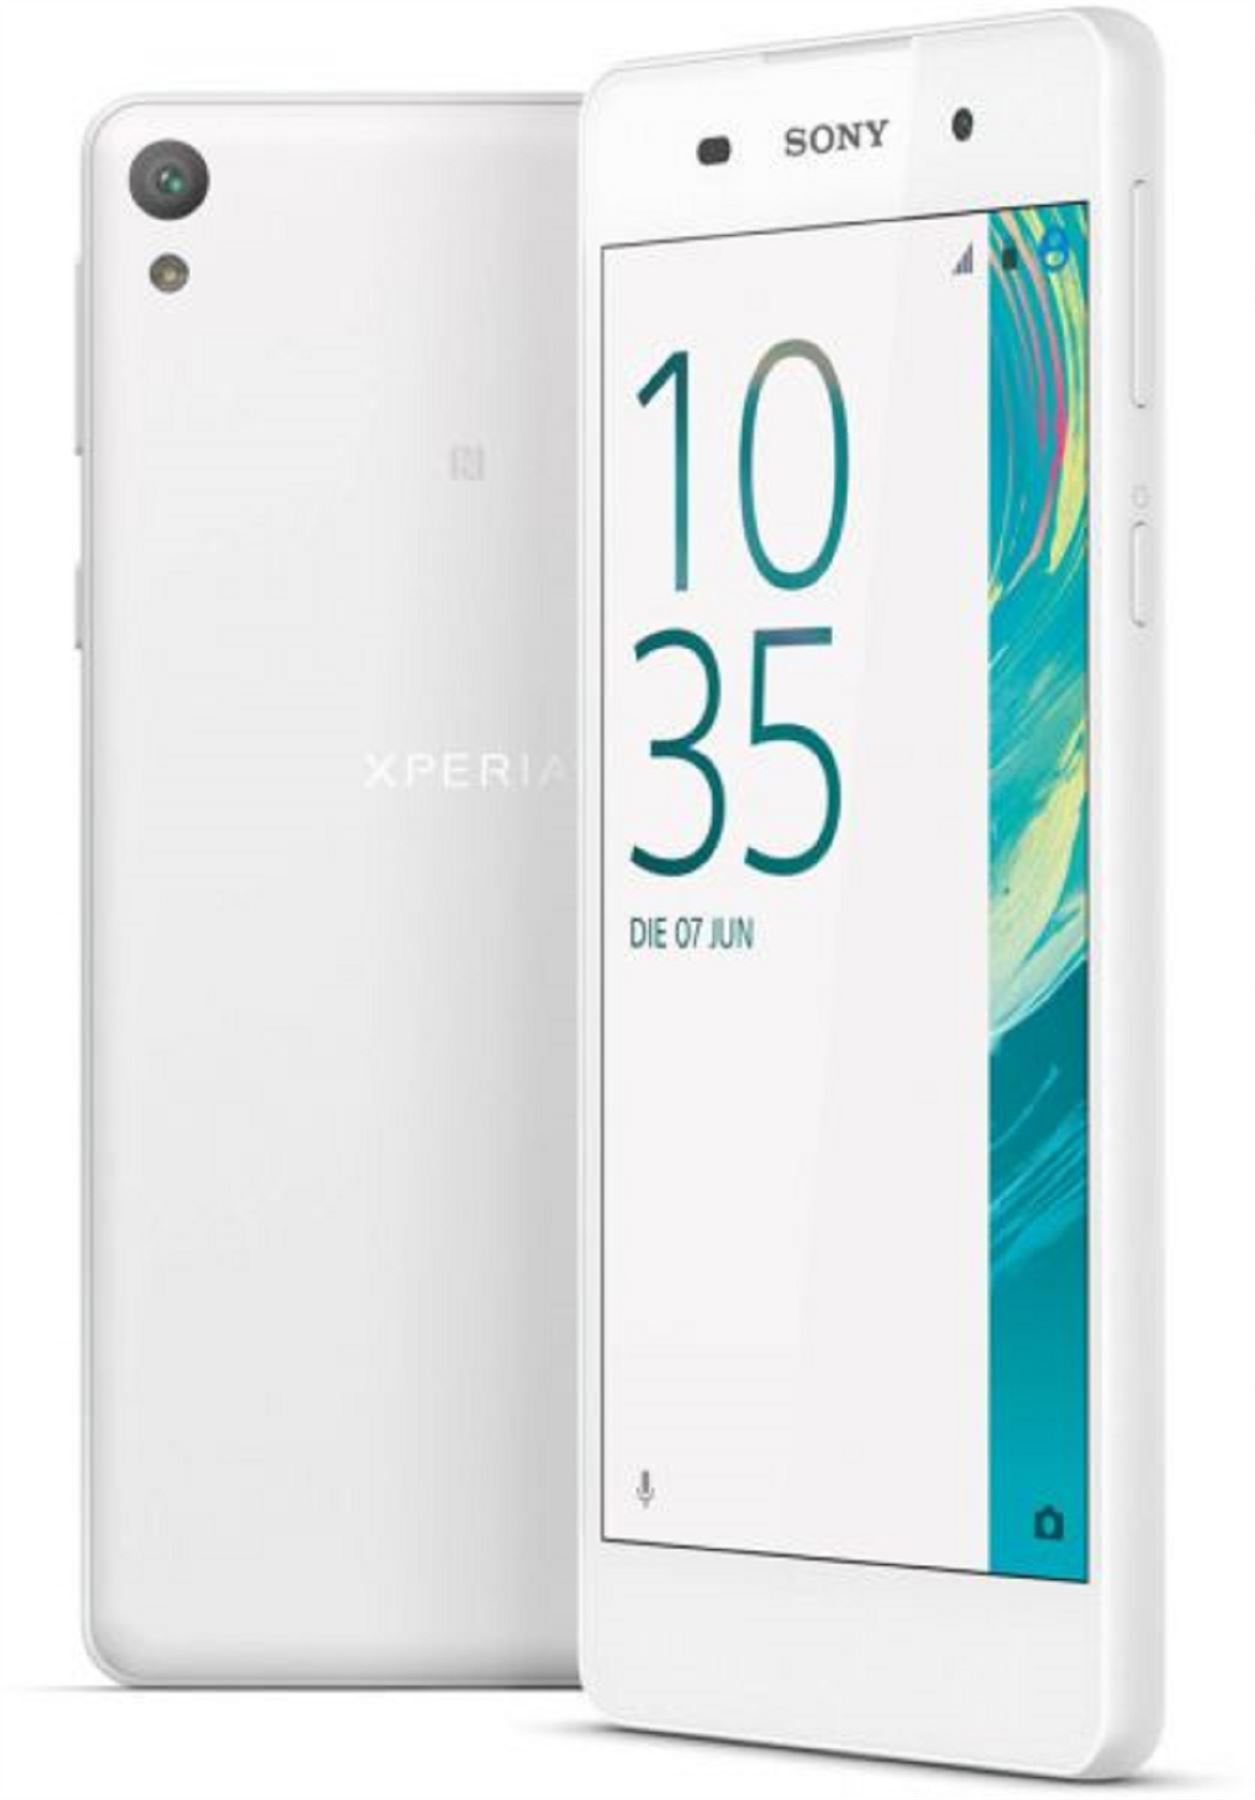 Sony Xperia E5 16 GB White Unlocked Smartphone Missing Accessories 1 ...